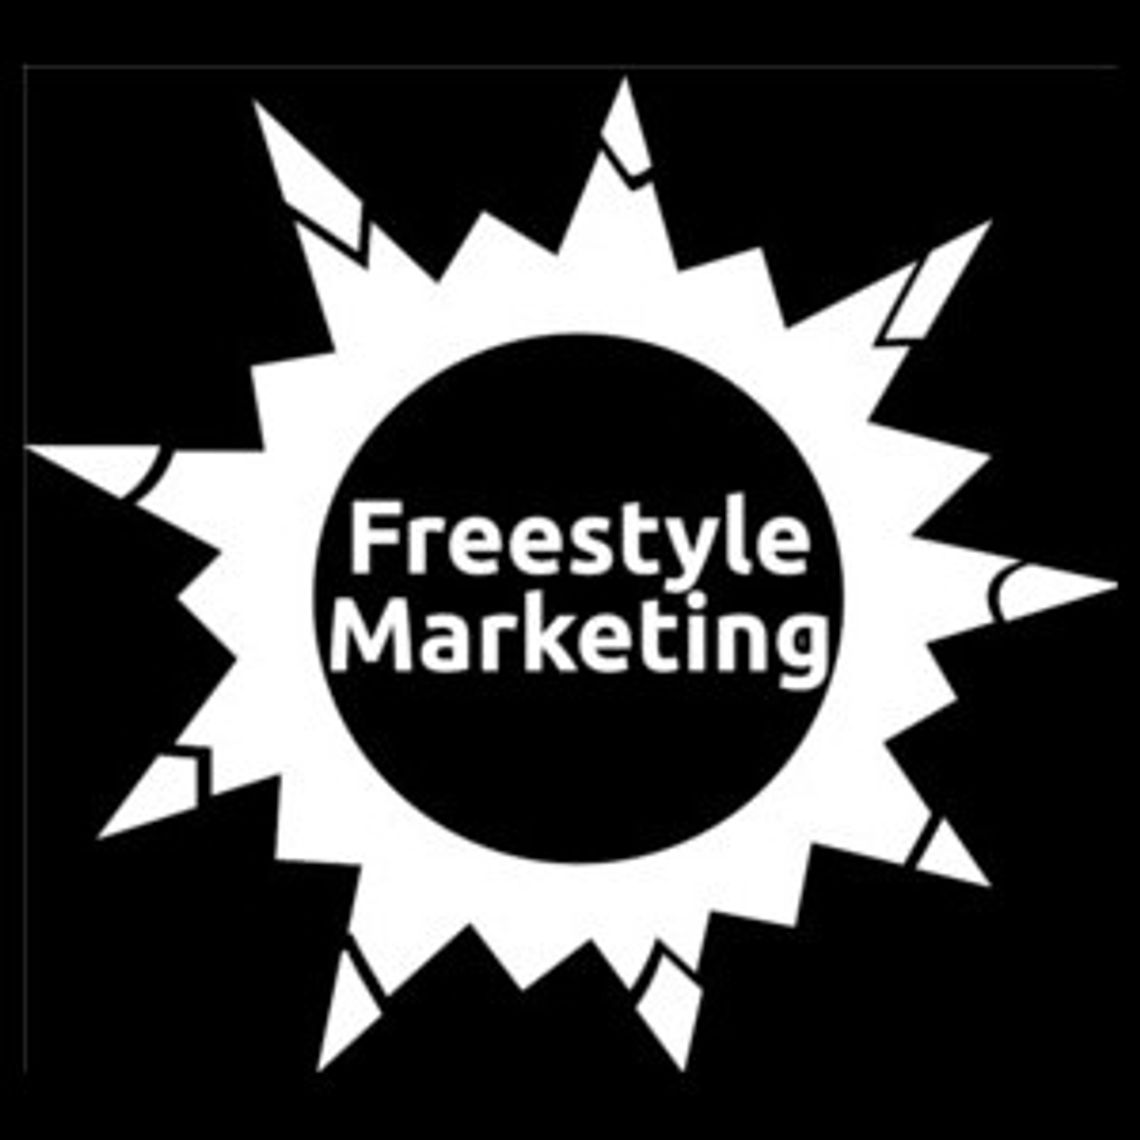 Freestyle Marketing - marketing hotelowy